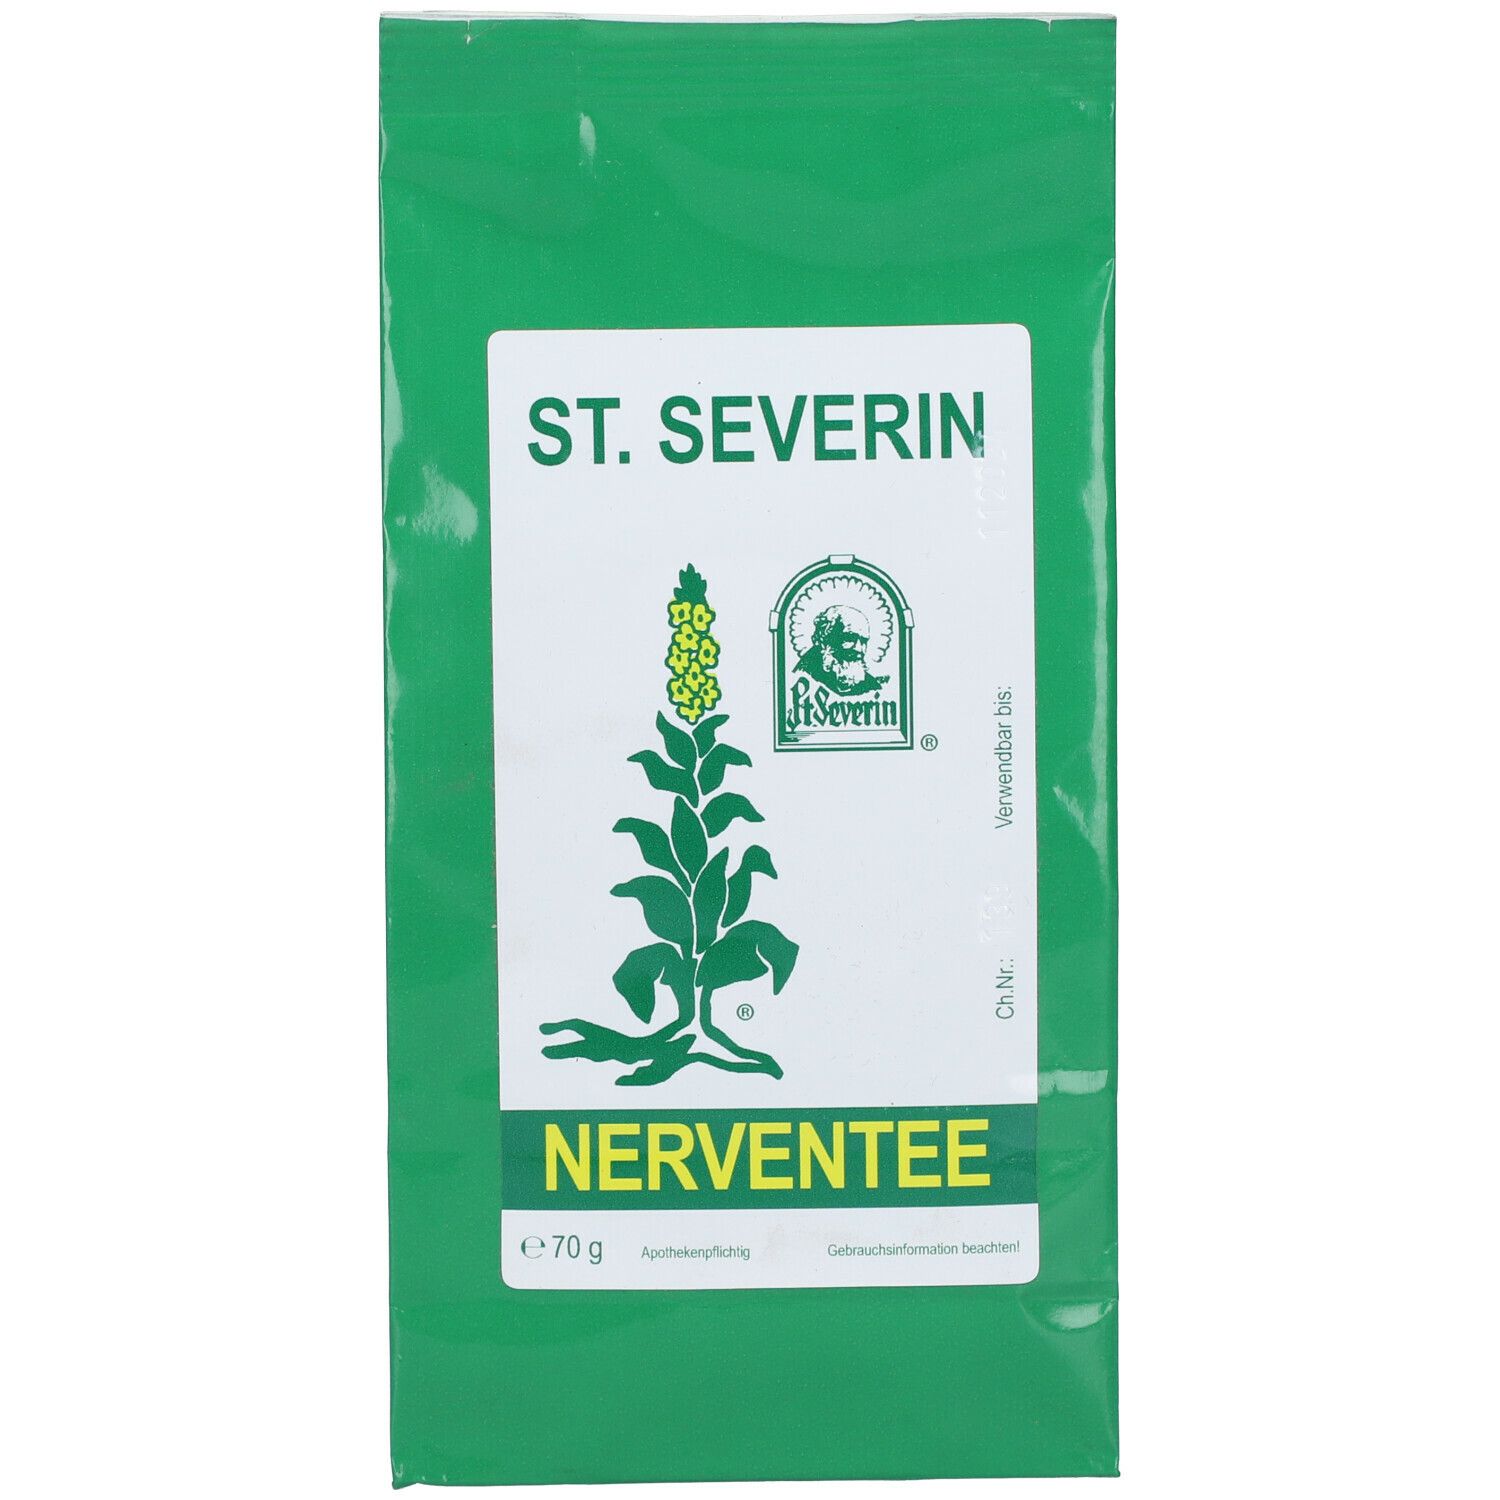 St. Severin Nerventee